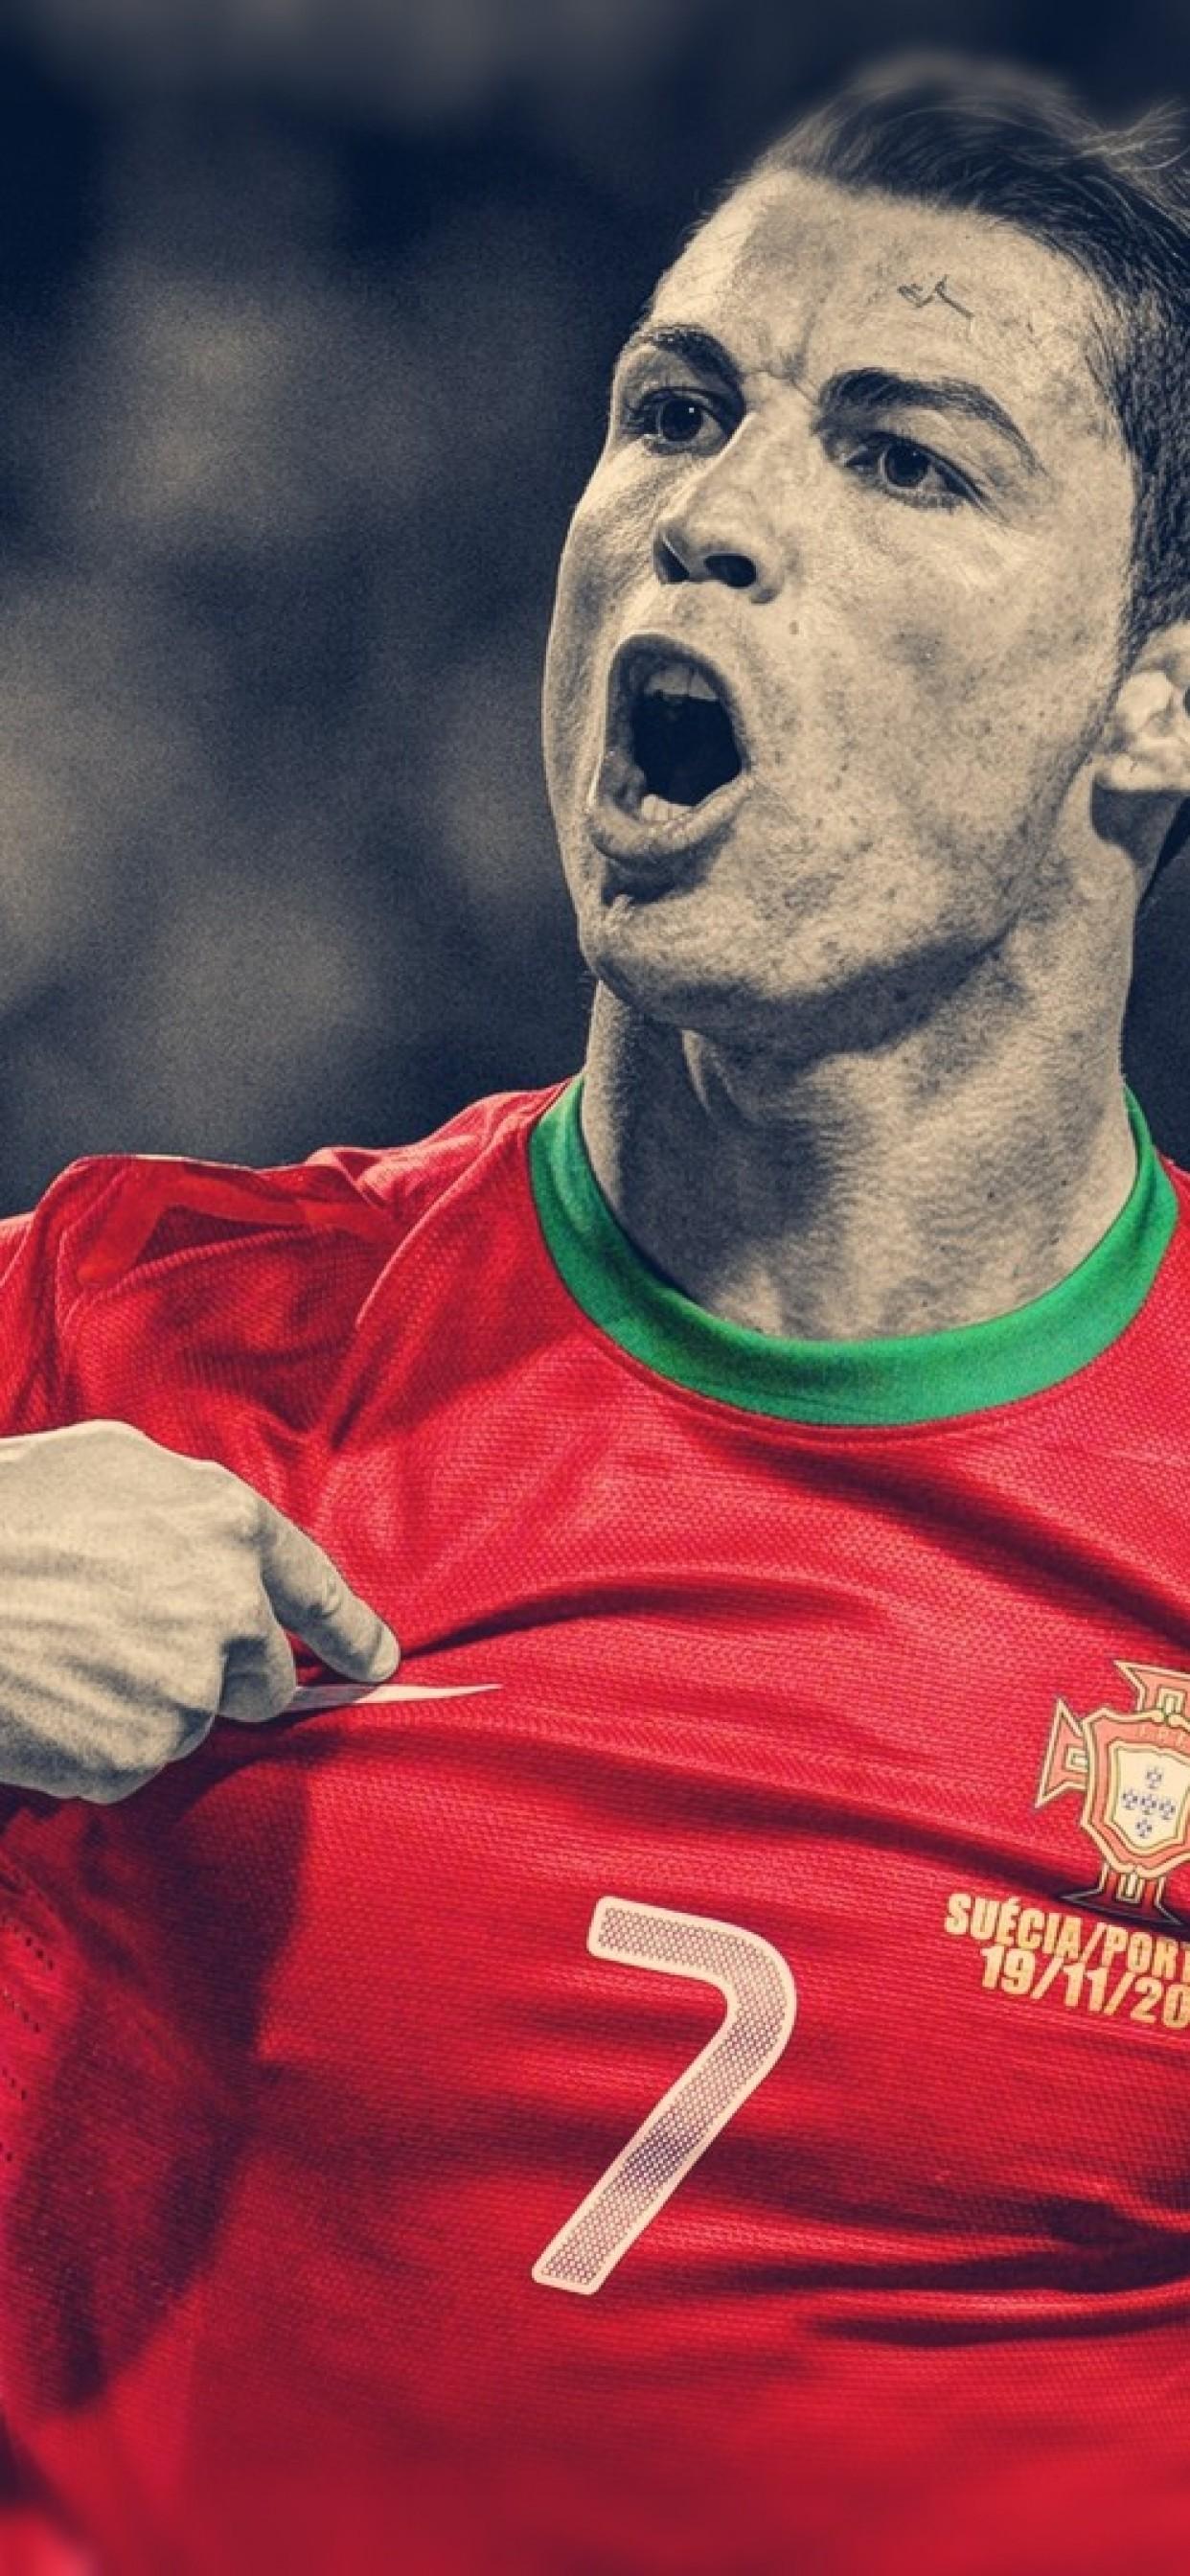 Cristiano Ronaldo iPhone XS Max Wallpapers Download